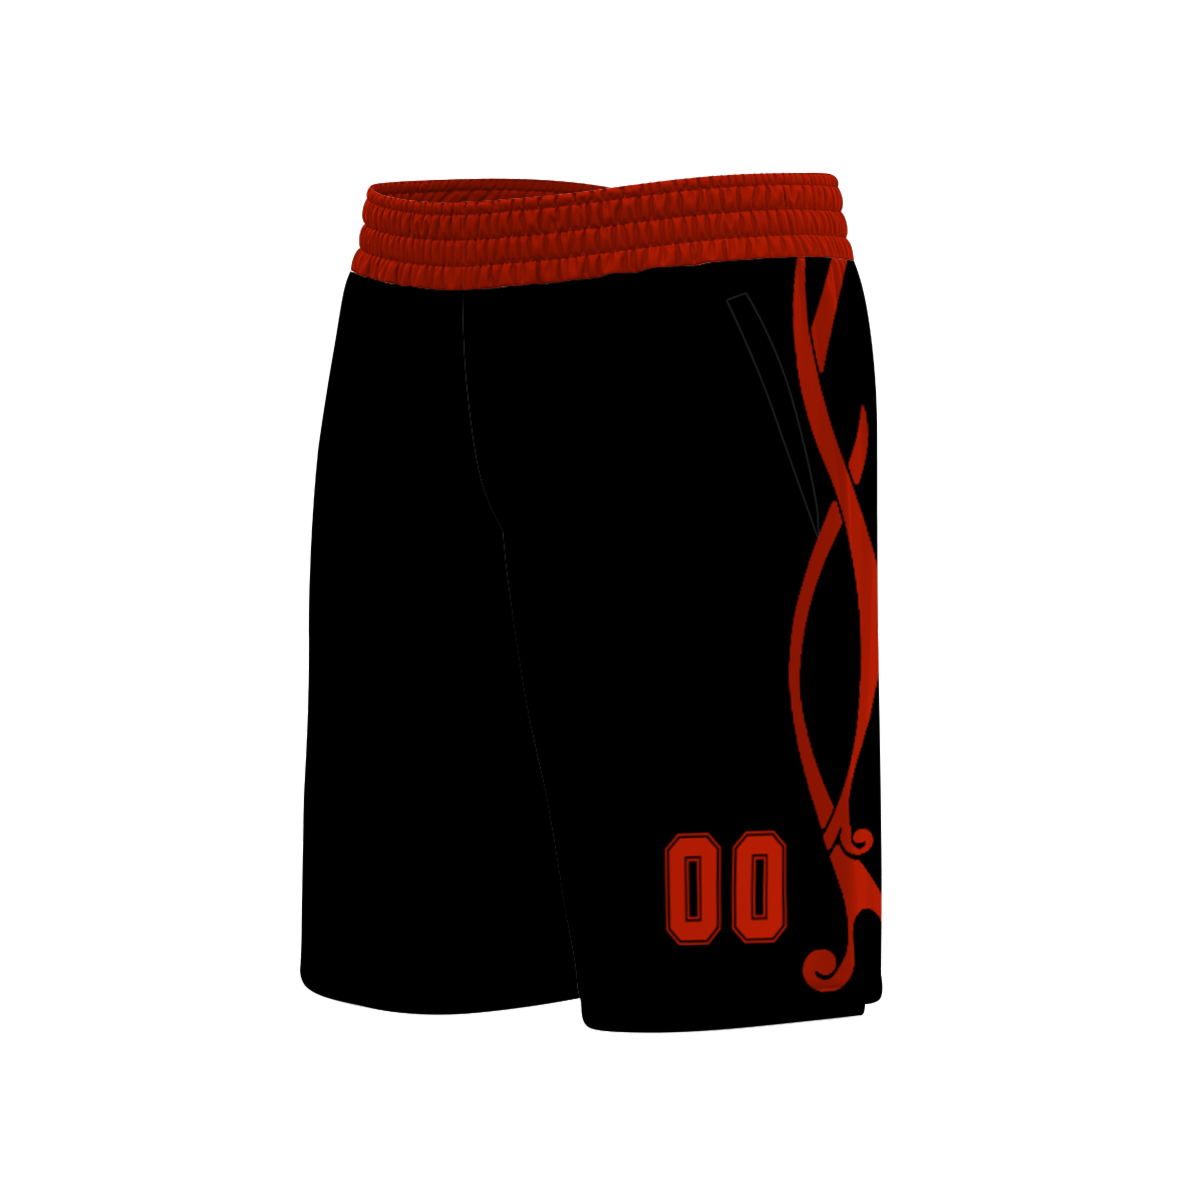 oem-custom-quick-dry-basketball-wear-personalized-design-sublimation-basketball-uniform-jerseys-at-cj-pod-8